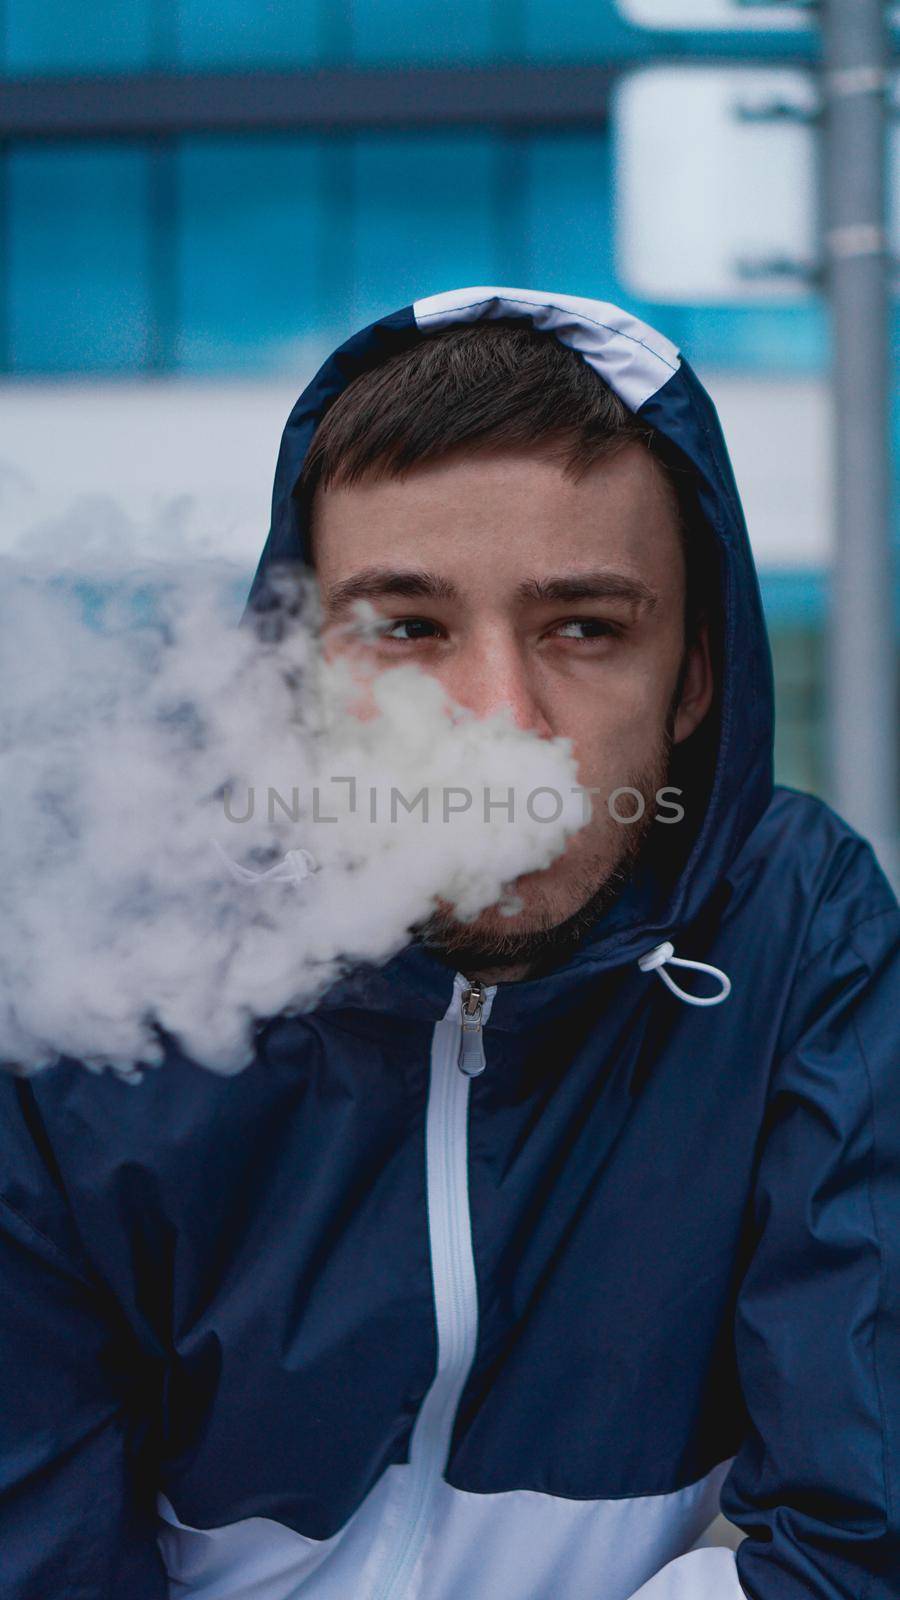 Man smoking electronic cigarette vapor. Smoking Electronic Cigarette against the background of a glass building